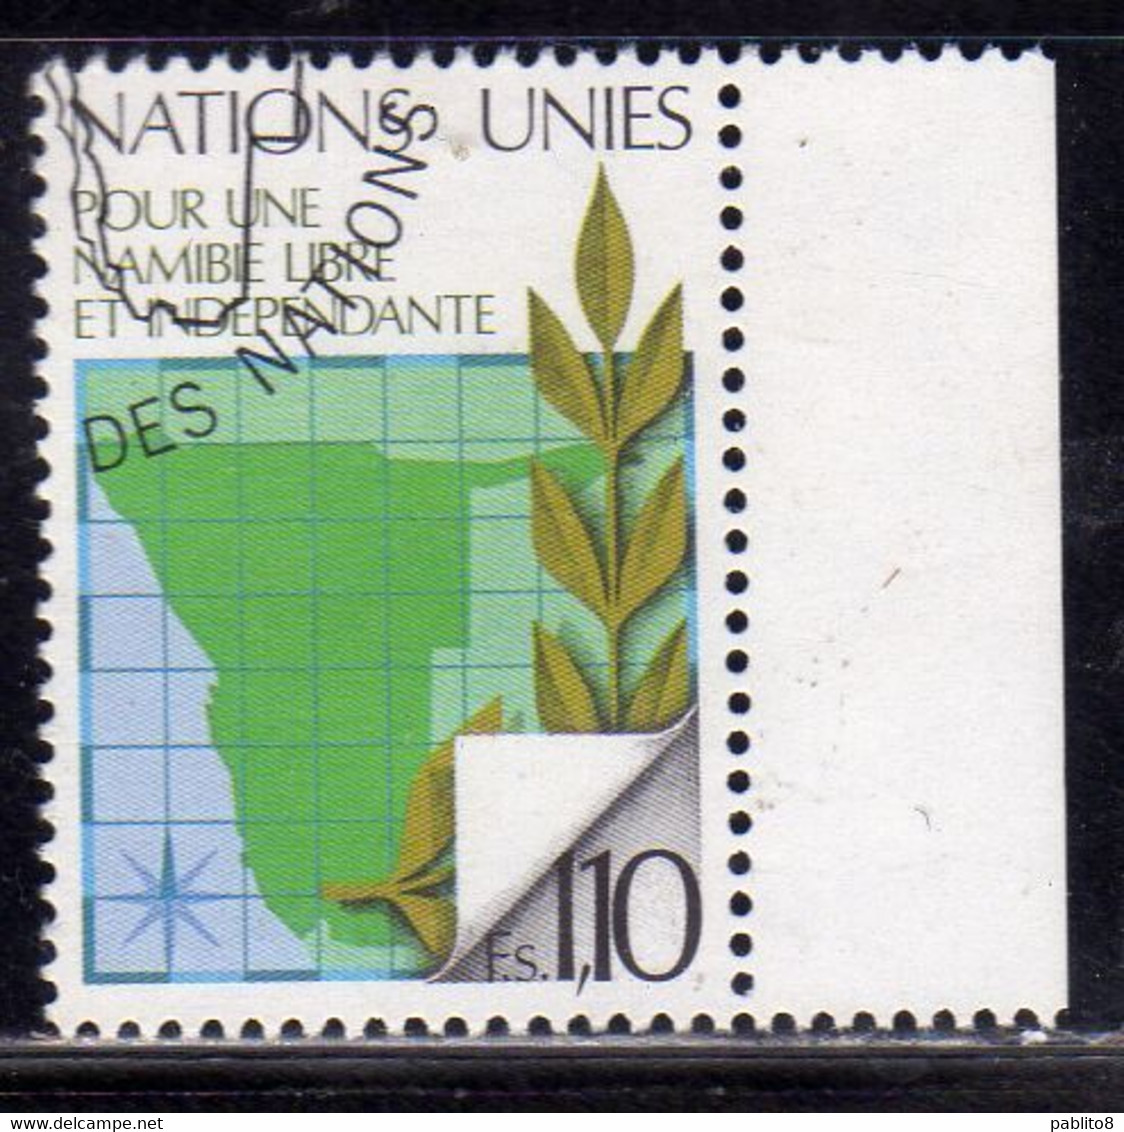 UNITED NATIONS GENEVE GINEVRA GENEVA ONU UN UNO 1979 NAMIBIA INDEPENDENT LIBRE INDEPENDANTE 1.10fr USATO USED OBLITERE' - Gebruikt